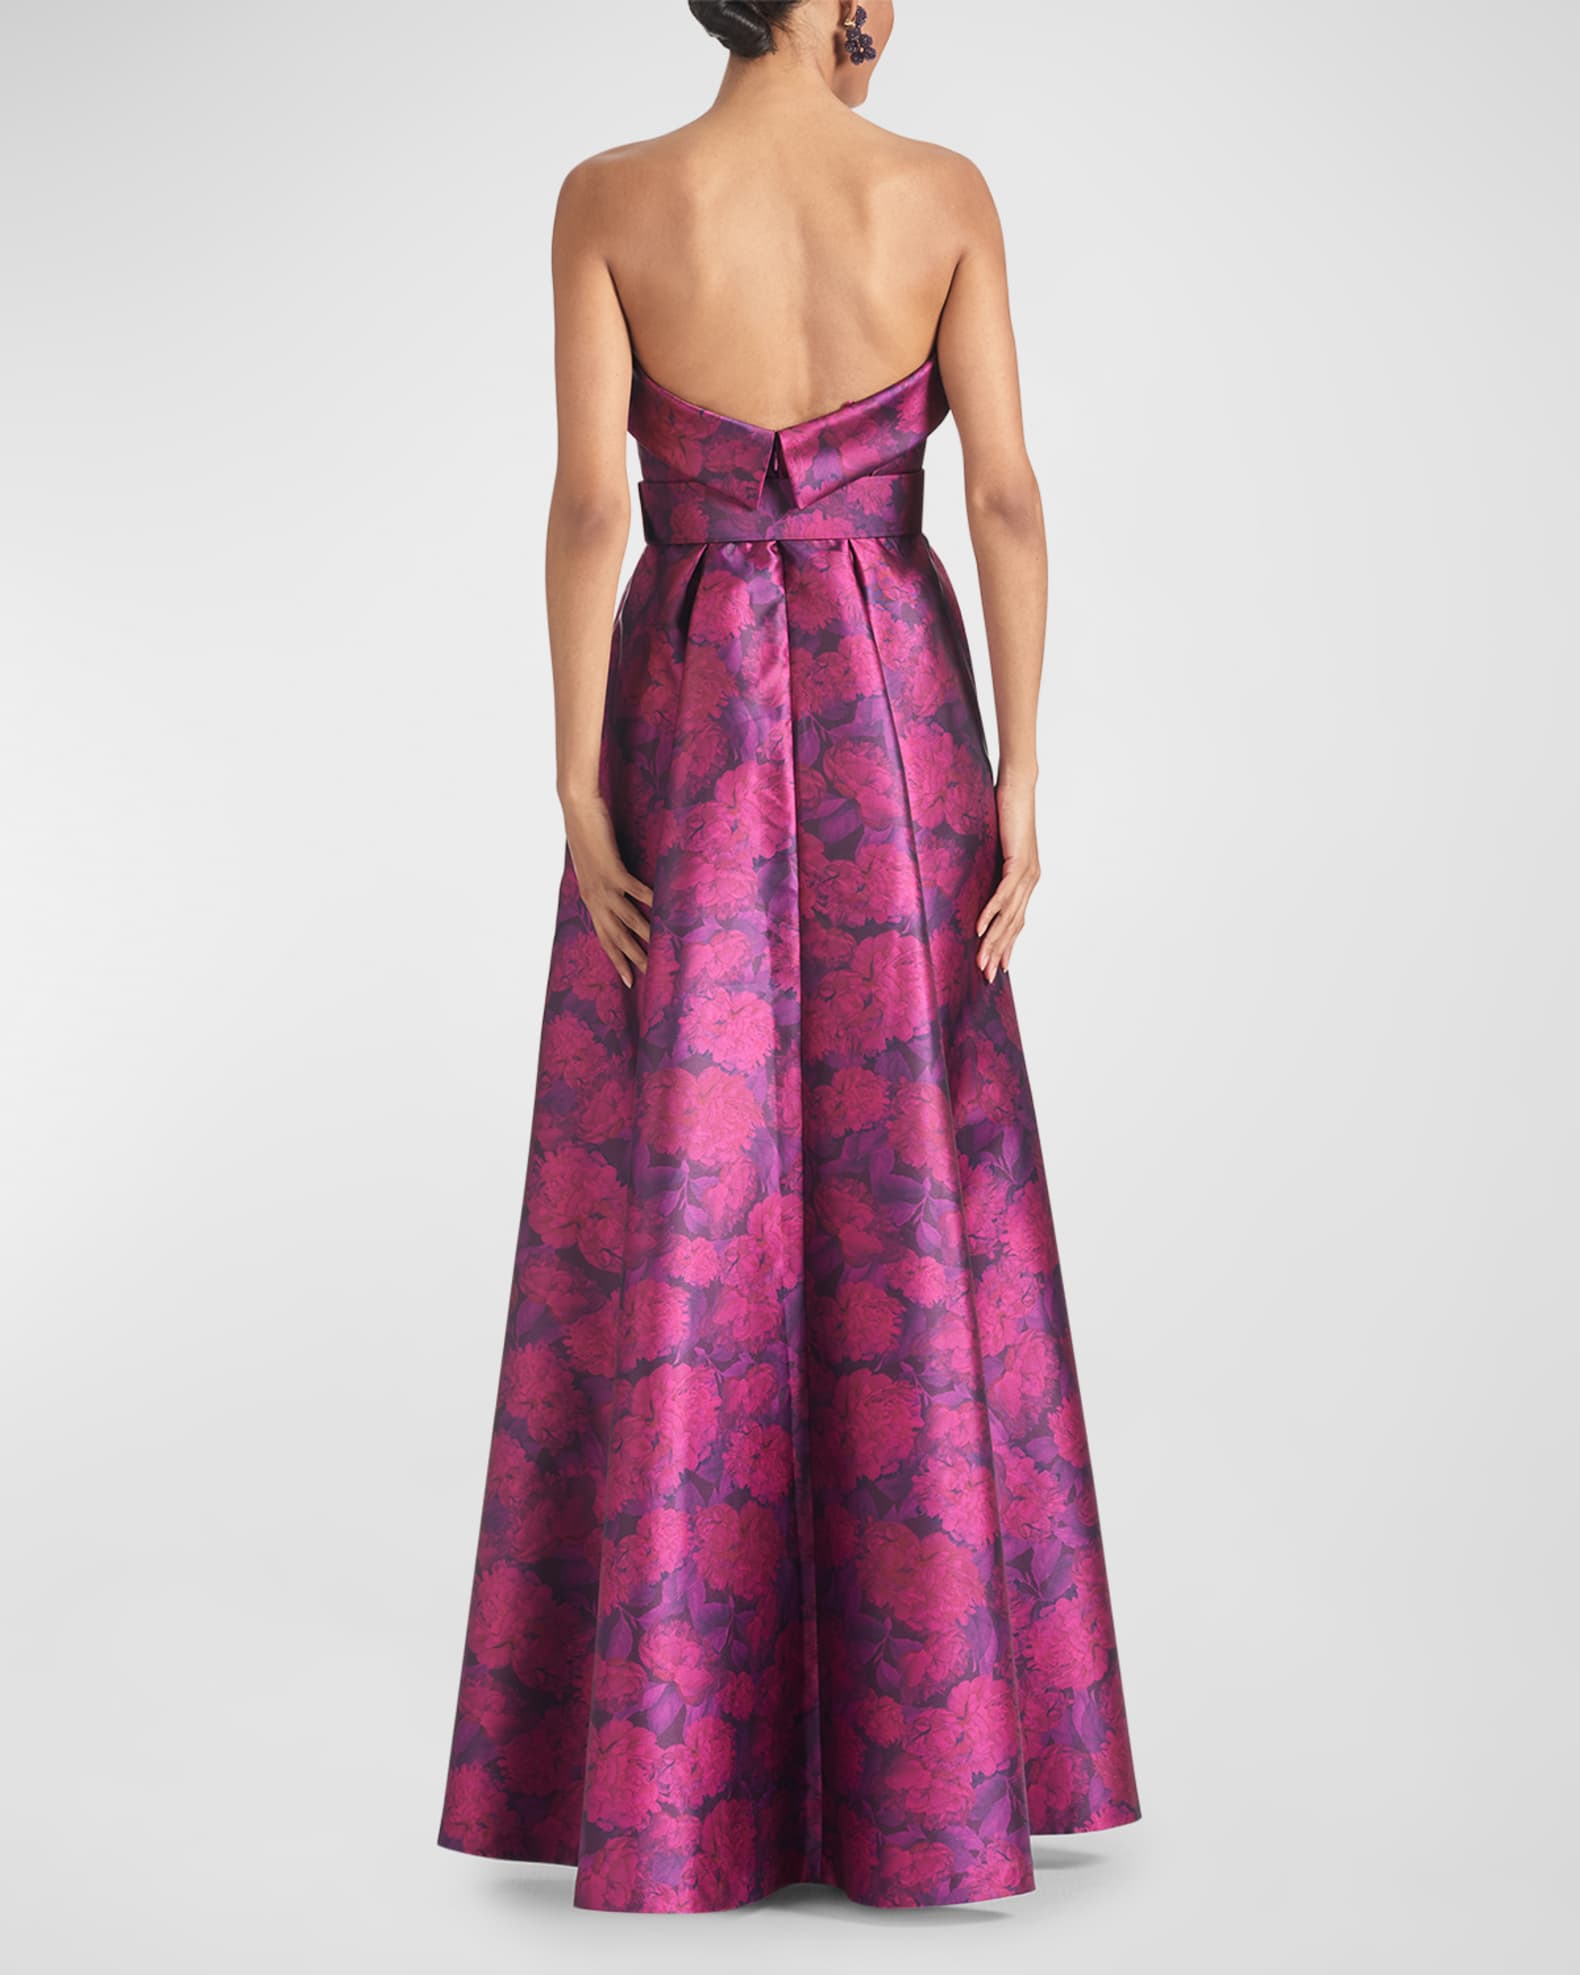 Sachin & Babi Brielle Strapless Floral-Print Mikado Gown | Neiman Marcus